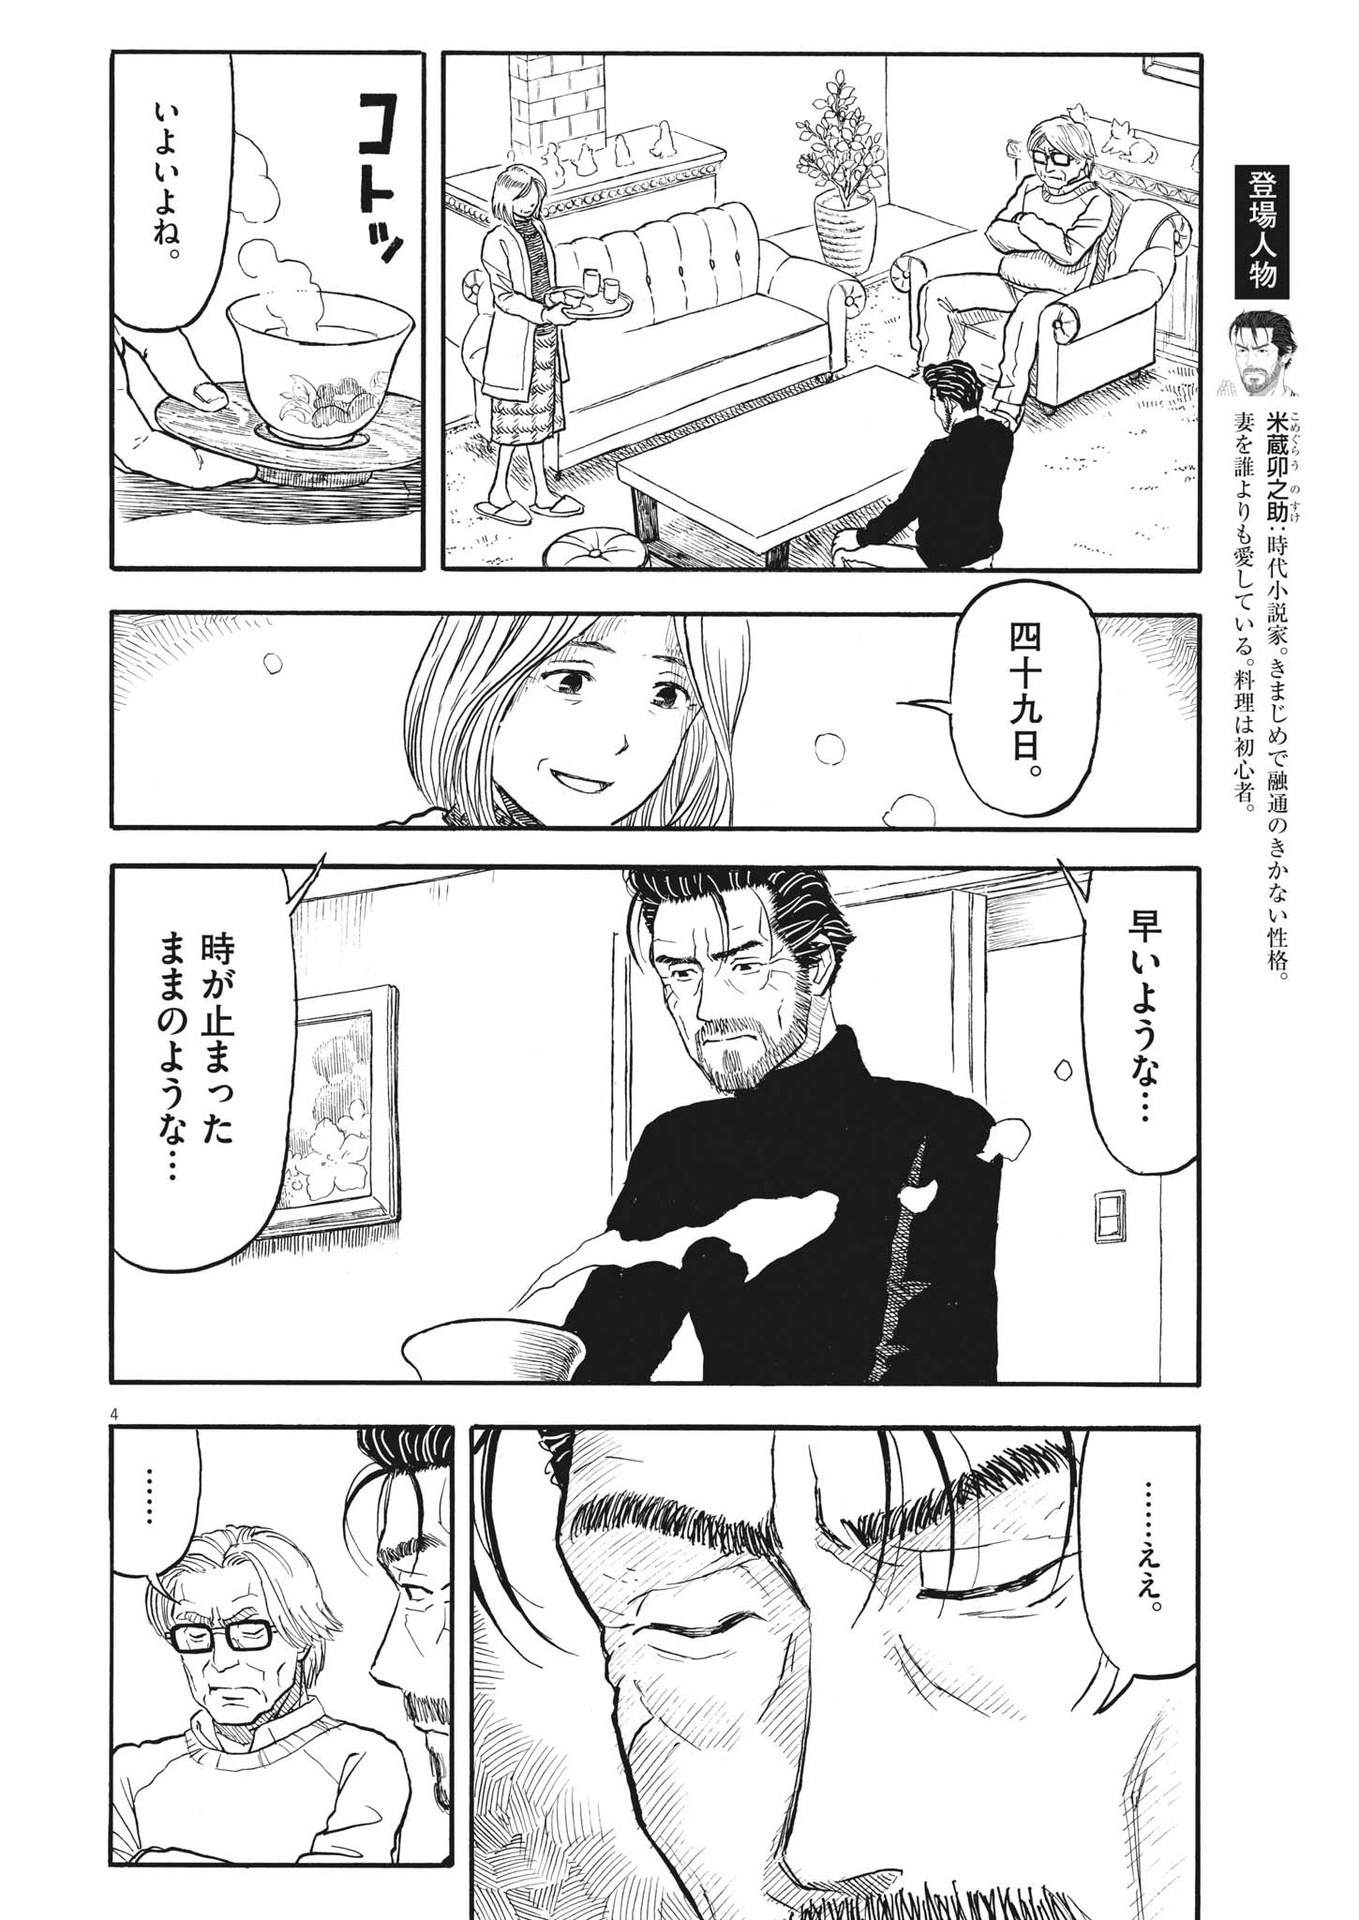 Komegura Fuufu no Recipe-chou - Chapter 26 - Page 4